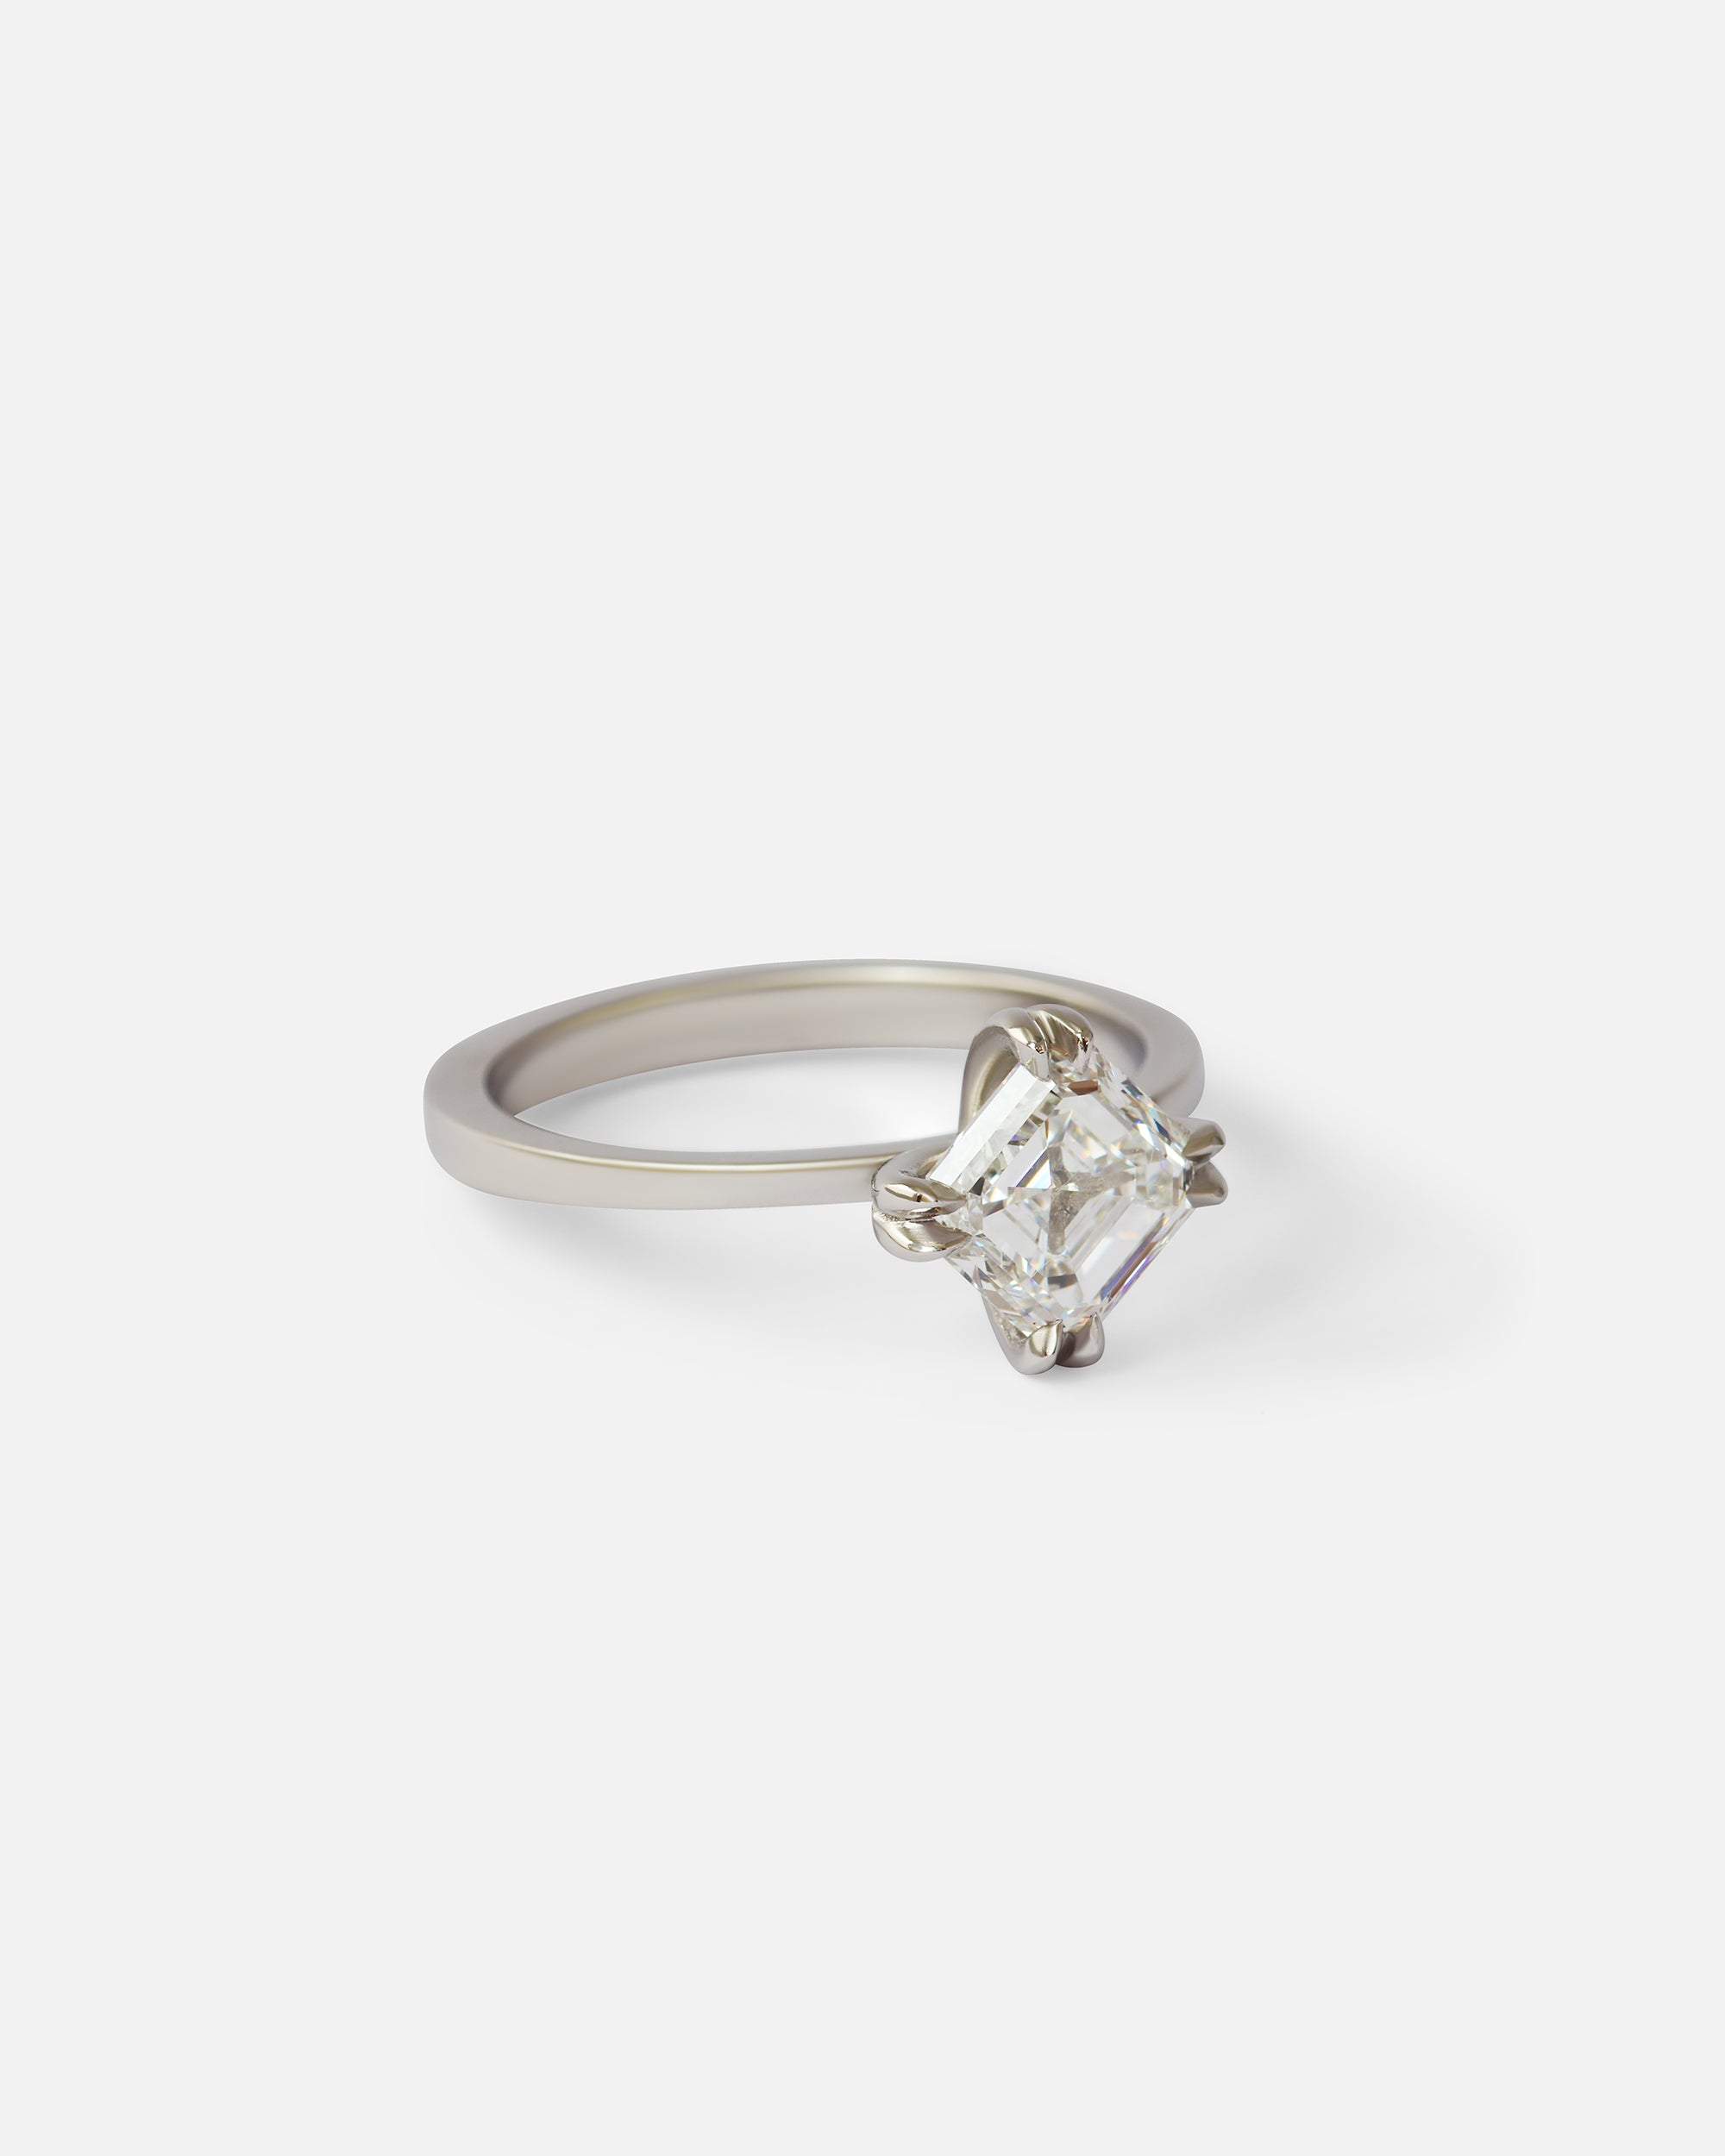 Ash / Asscher Cut Diamond Ring By fitzgerald jewelry